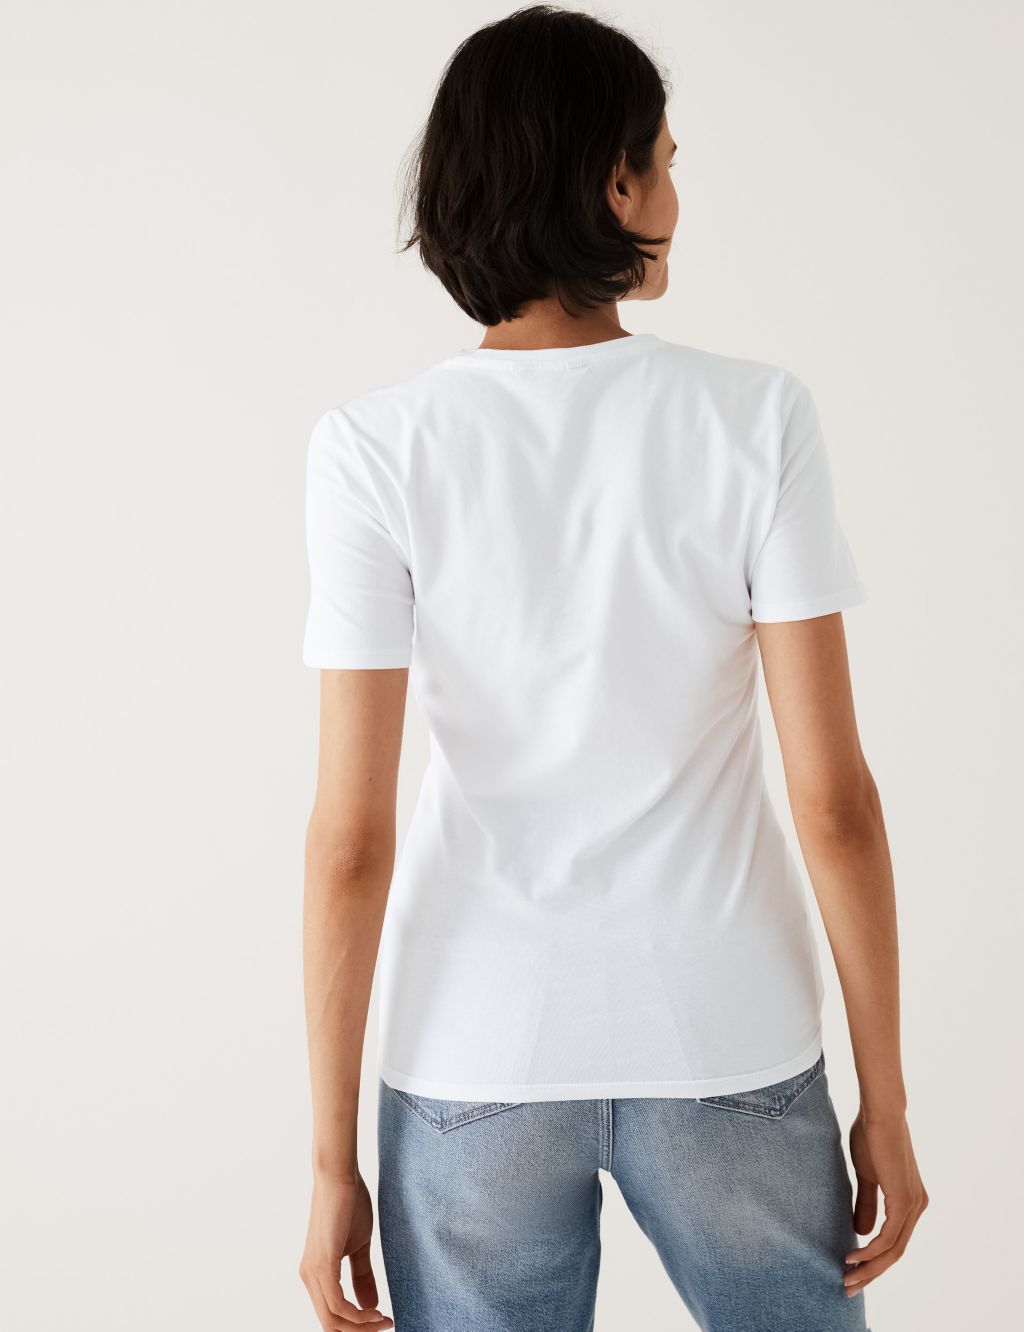 Cotton Rich Printed Slim Fit T-Shirt image 5